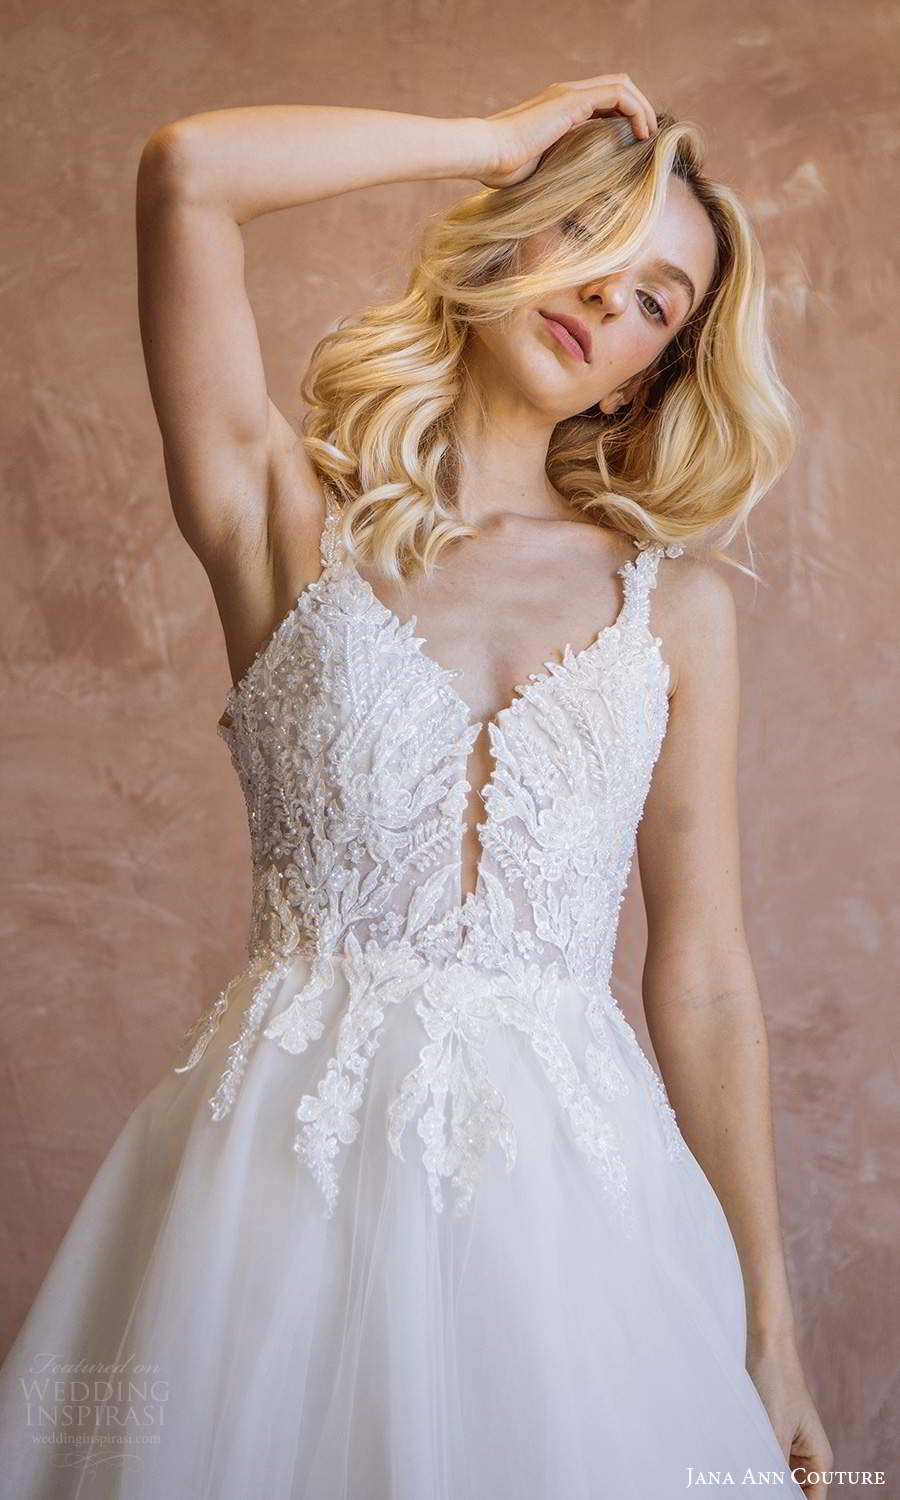 jana ann couture 2021 bridal sleeveless straps plunging v neckline embellished bodice a line ball gown wedding dress (20) mv